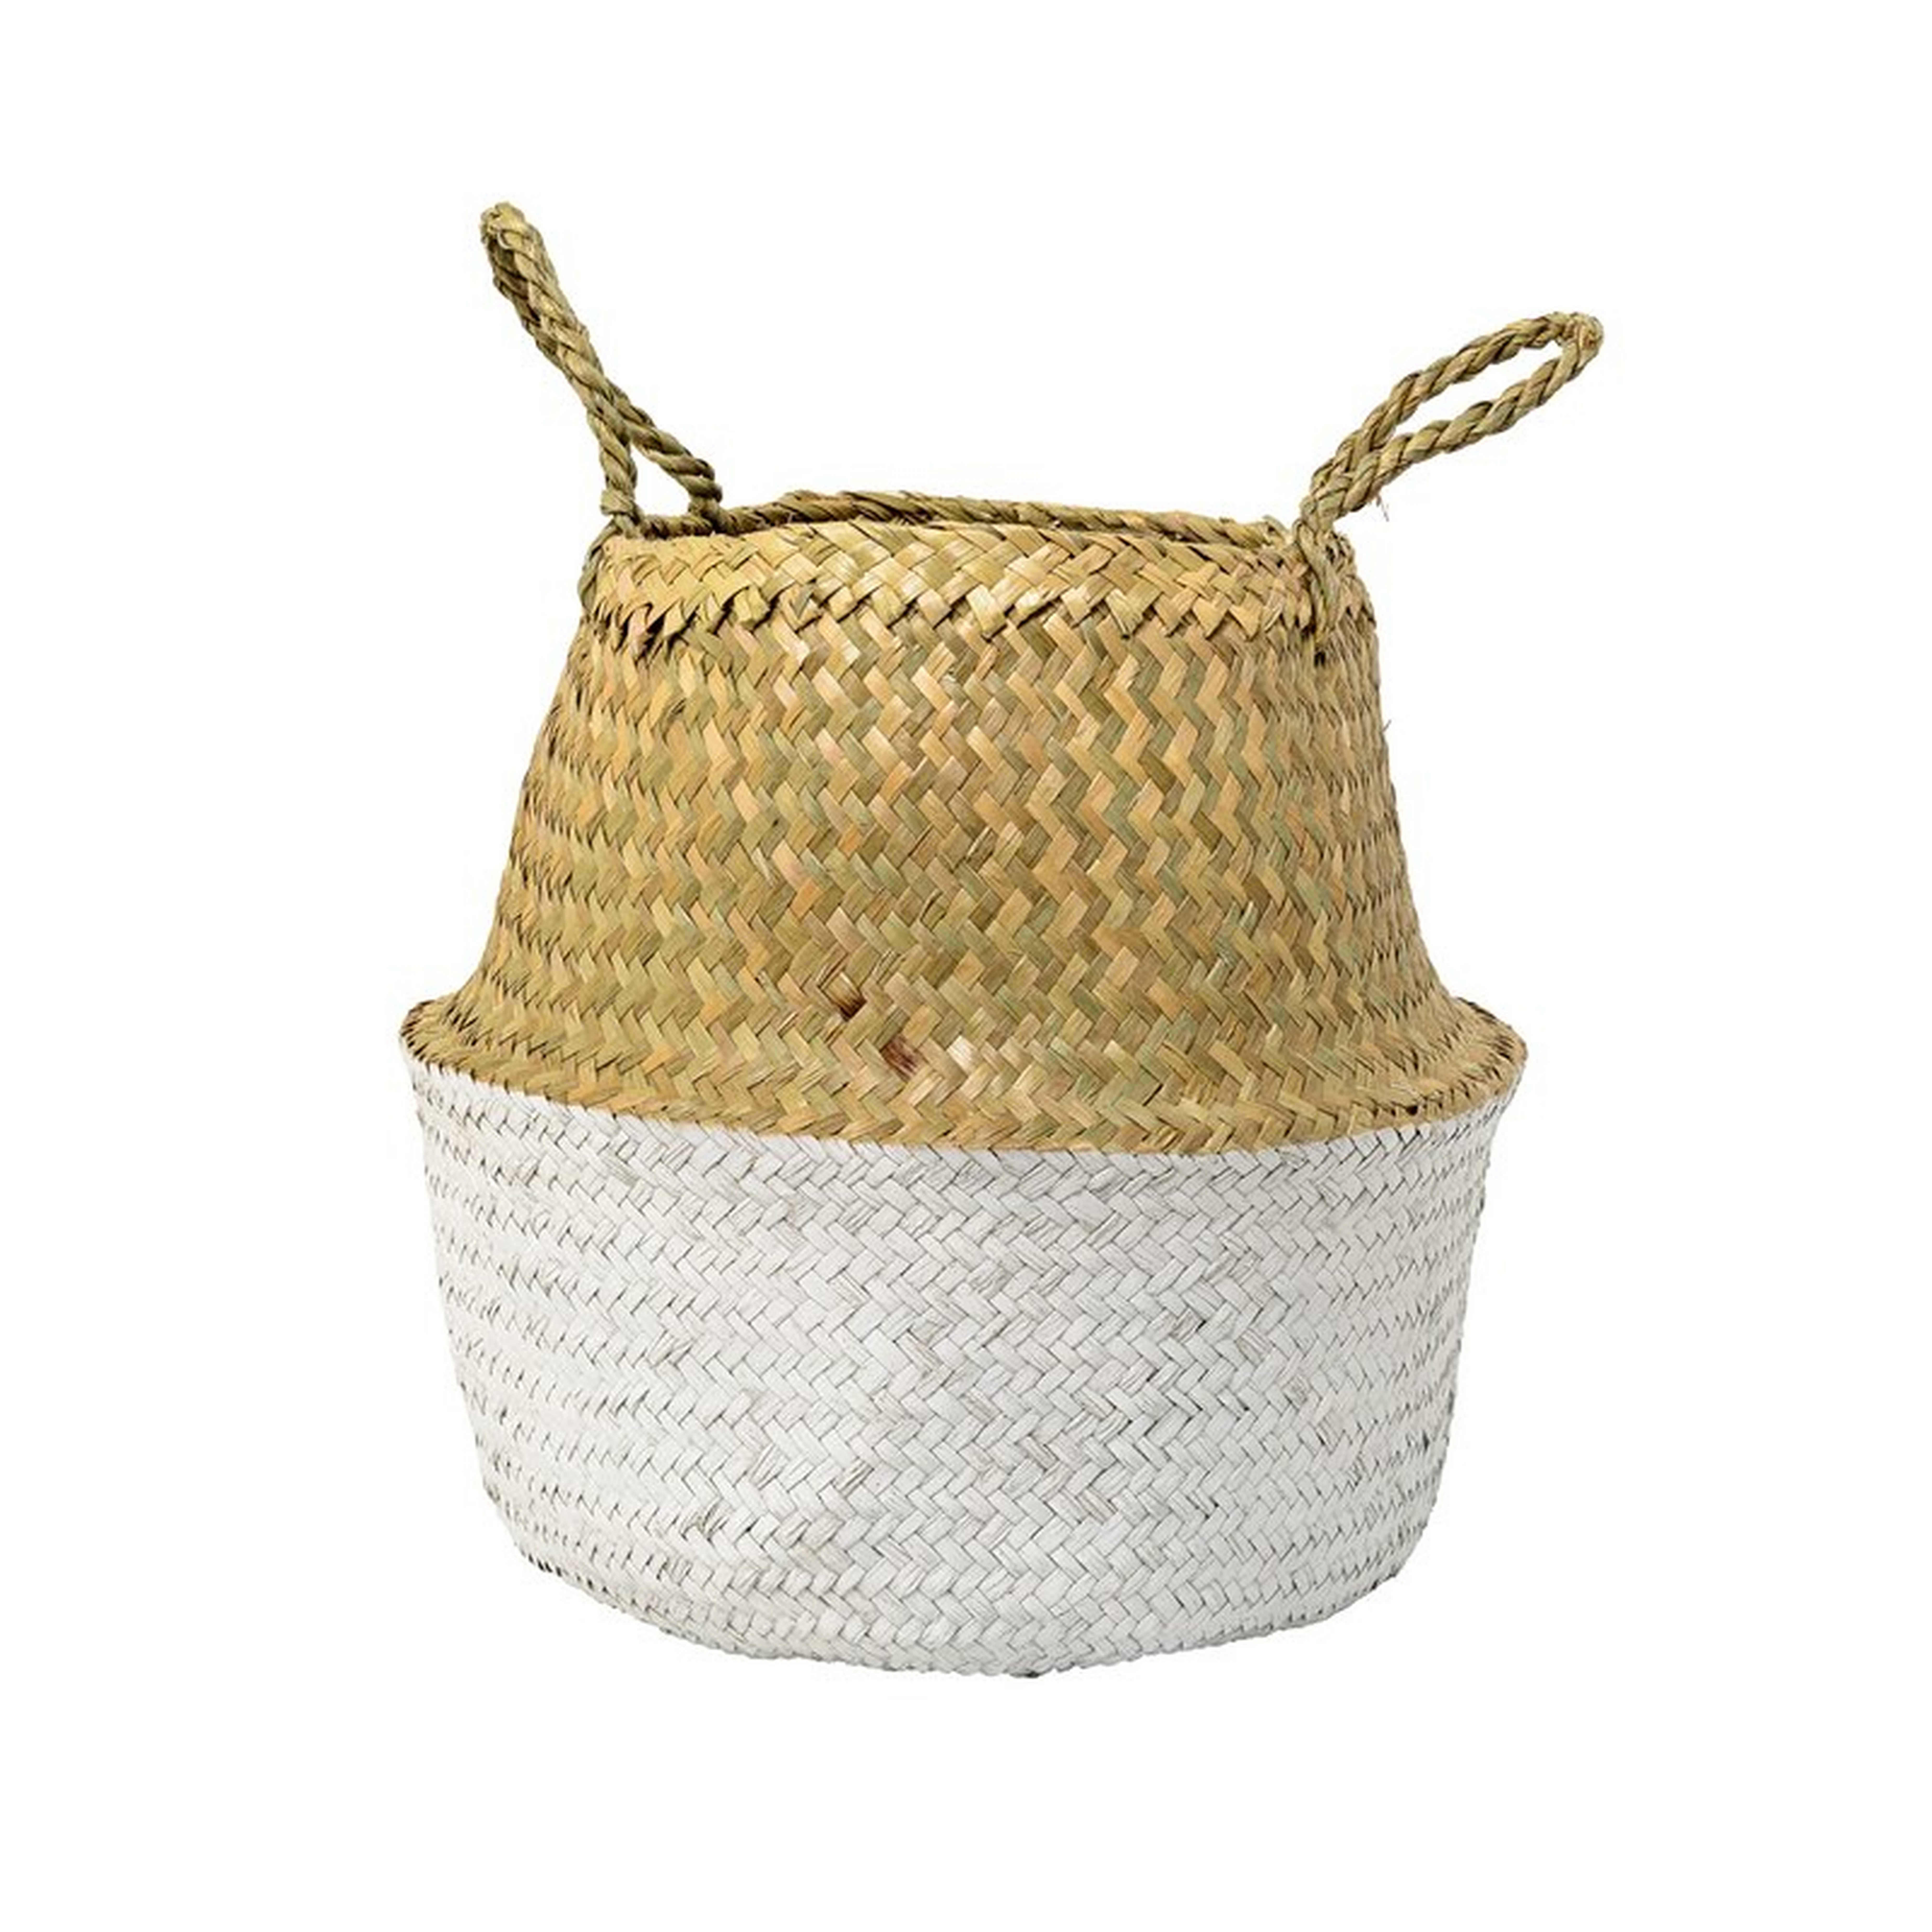 Wicker Basket - Natural/White - AllModern